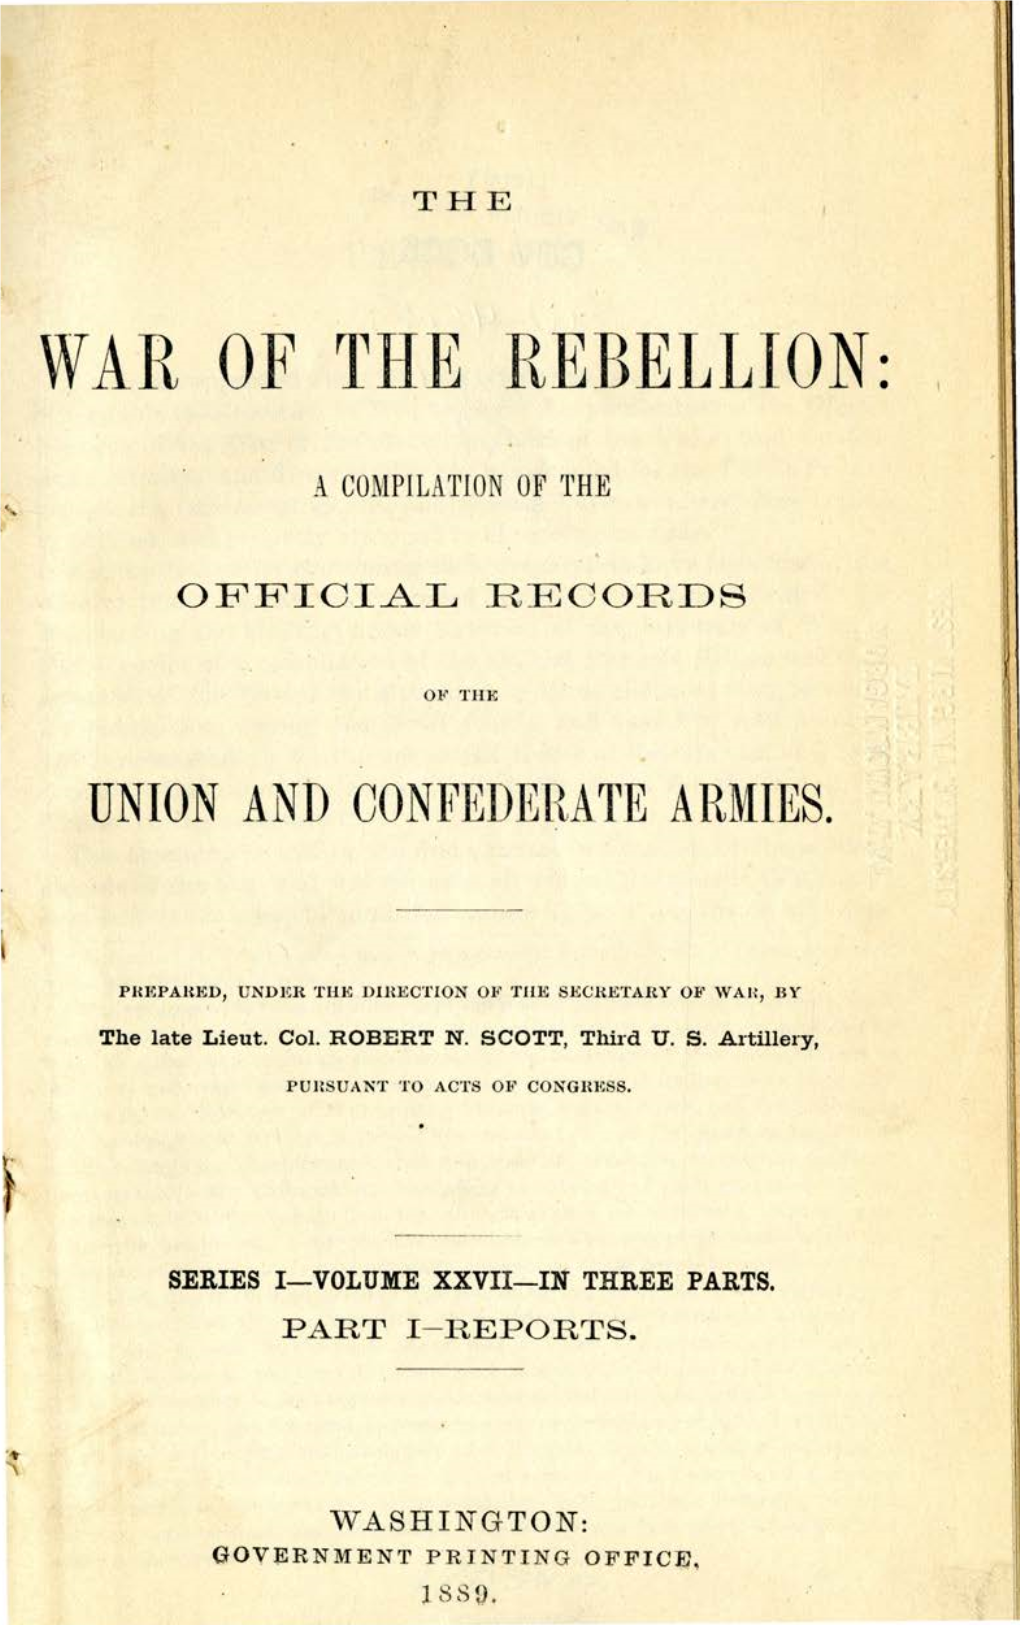 War of the Rebellion